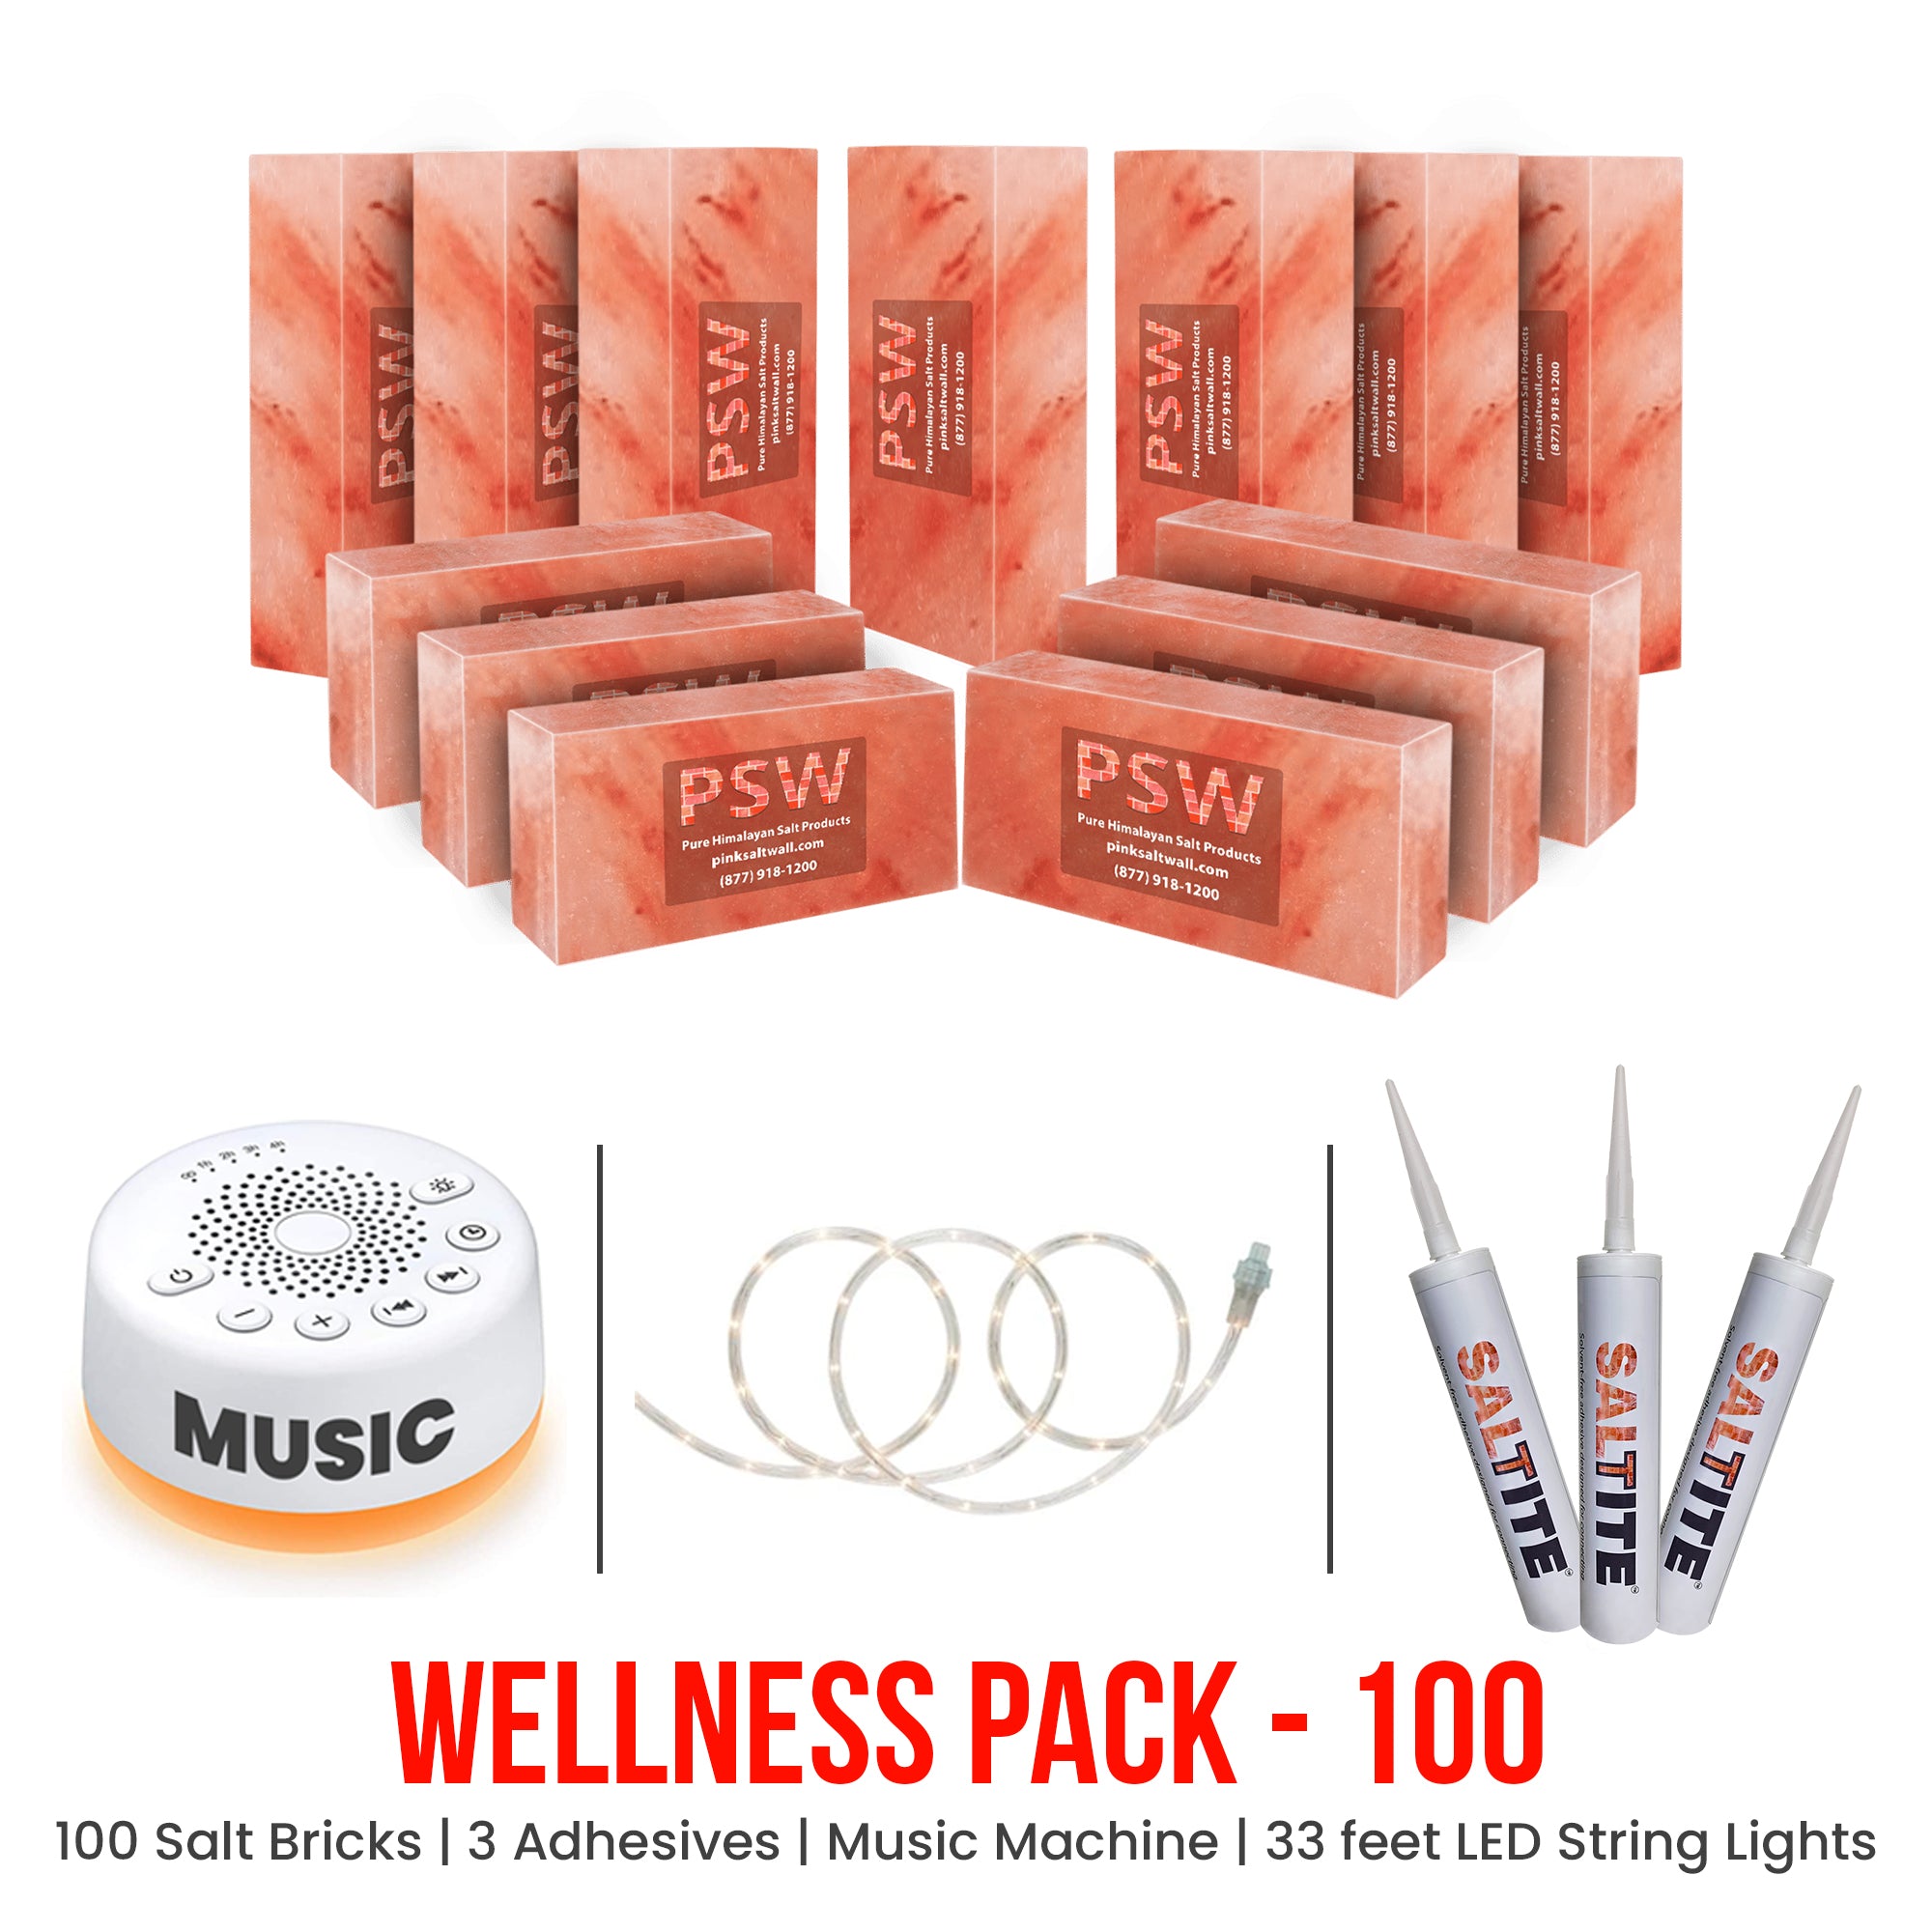 Wellness Pack - 100